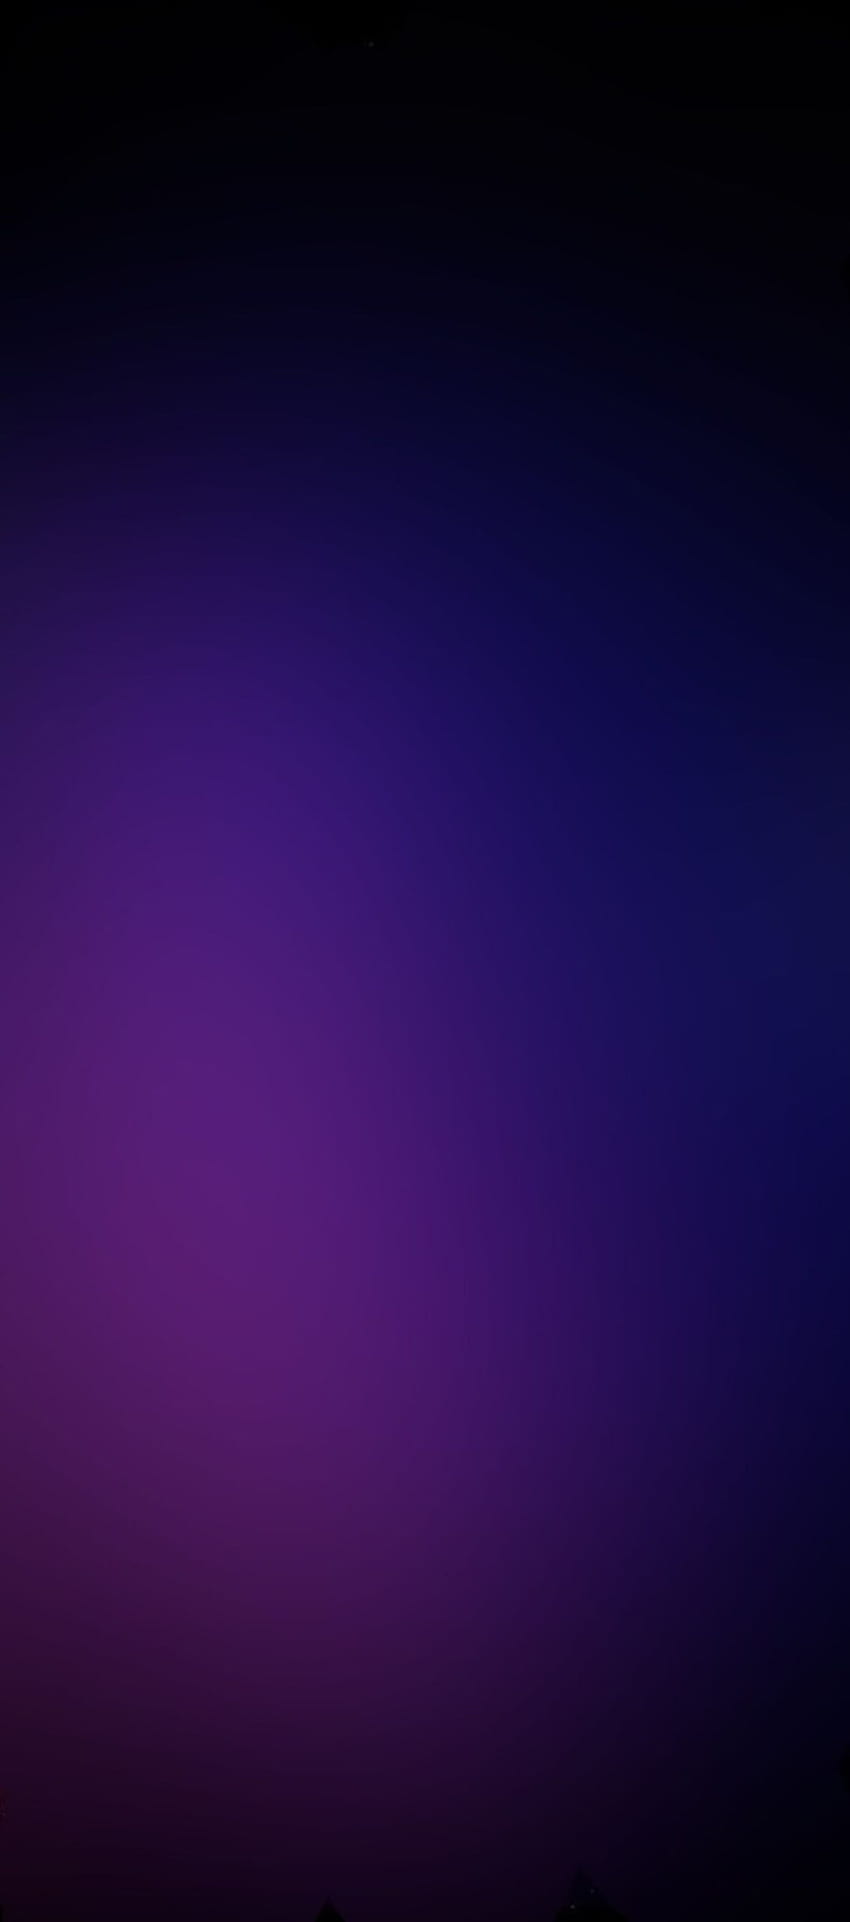 Purple Galaxy S8, violet colour HD phone wallpaper